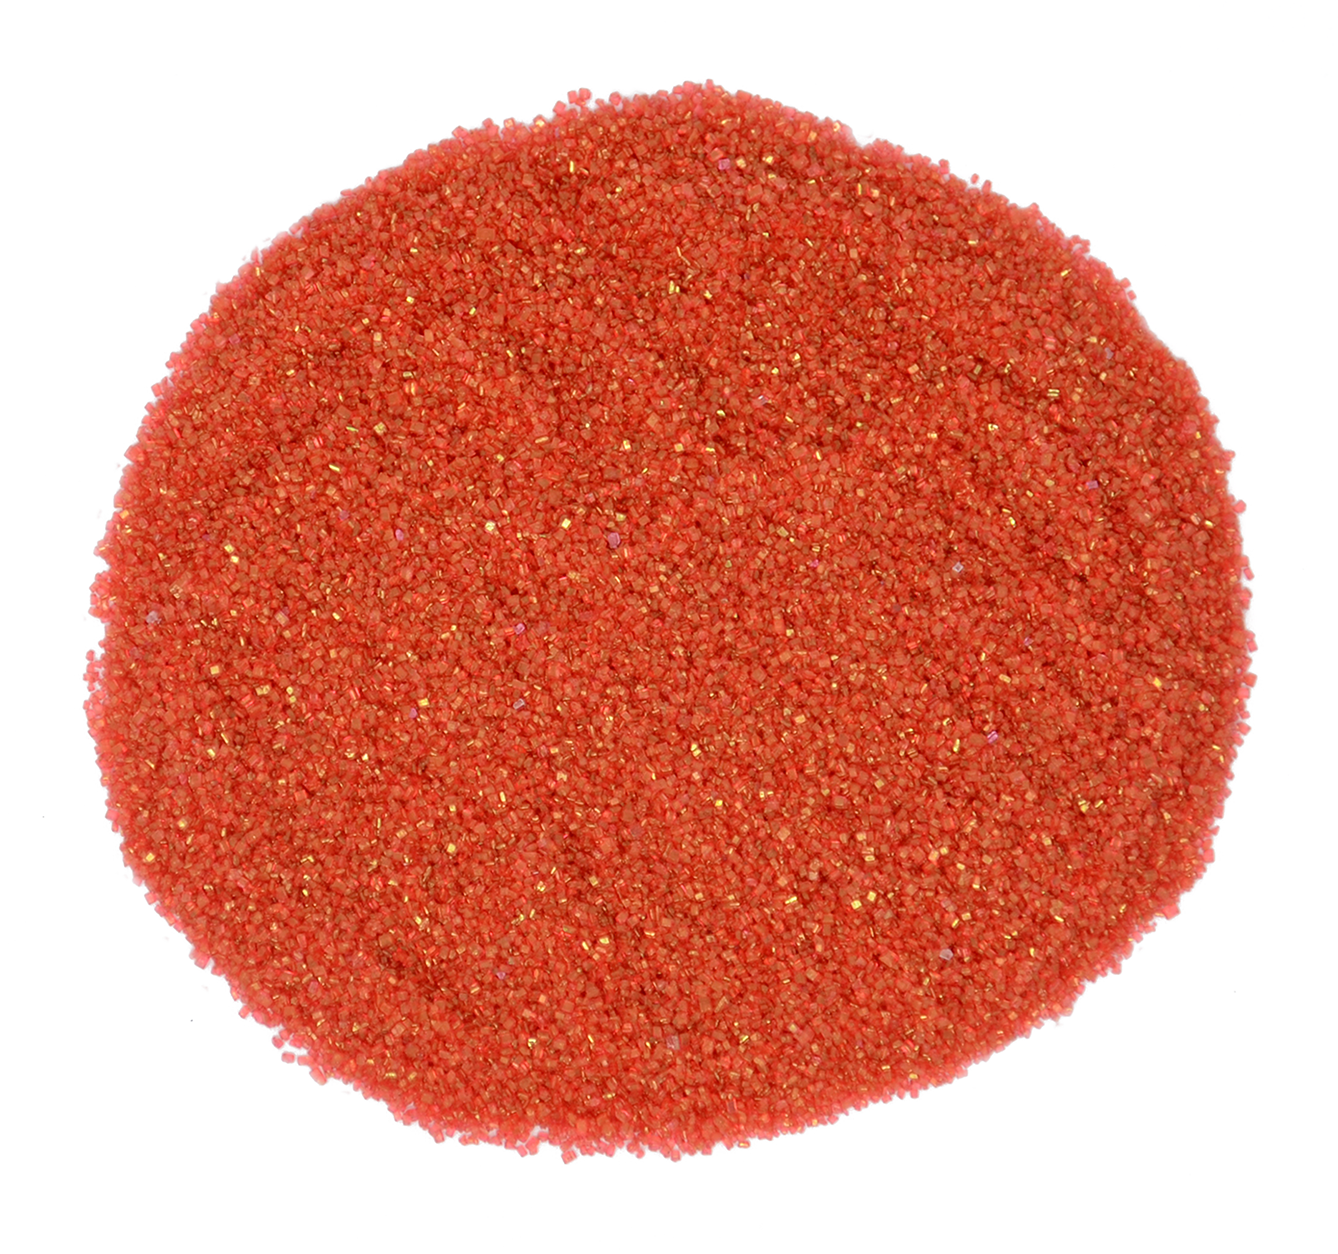 Ruby - Red Sanding Sugar 4oz